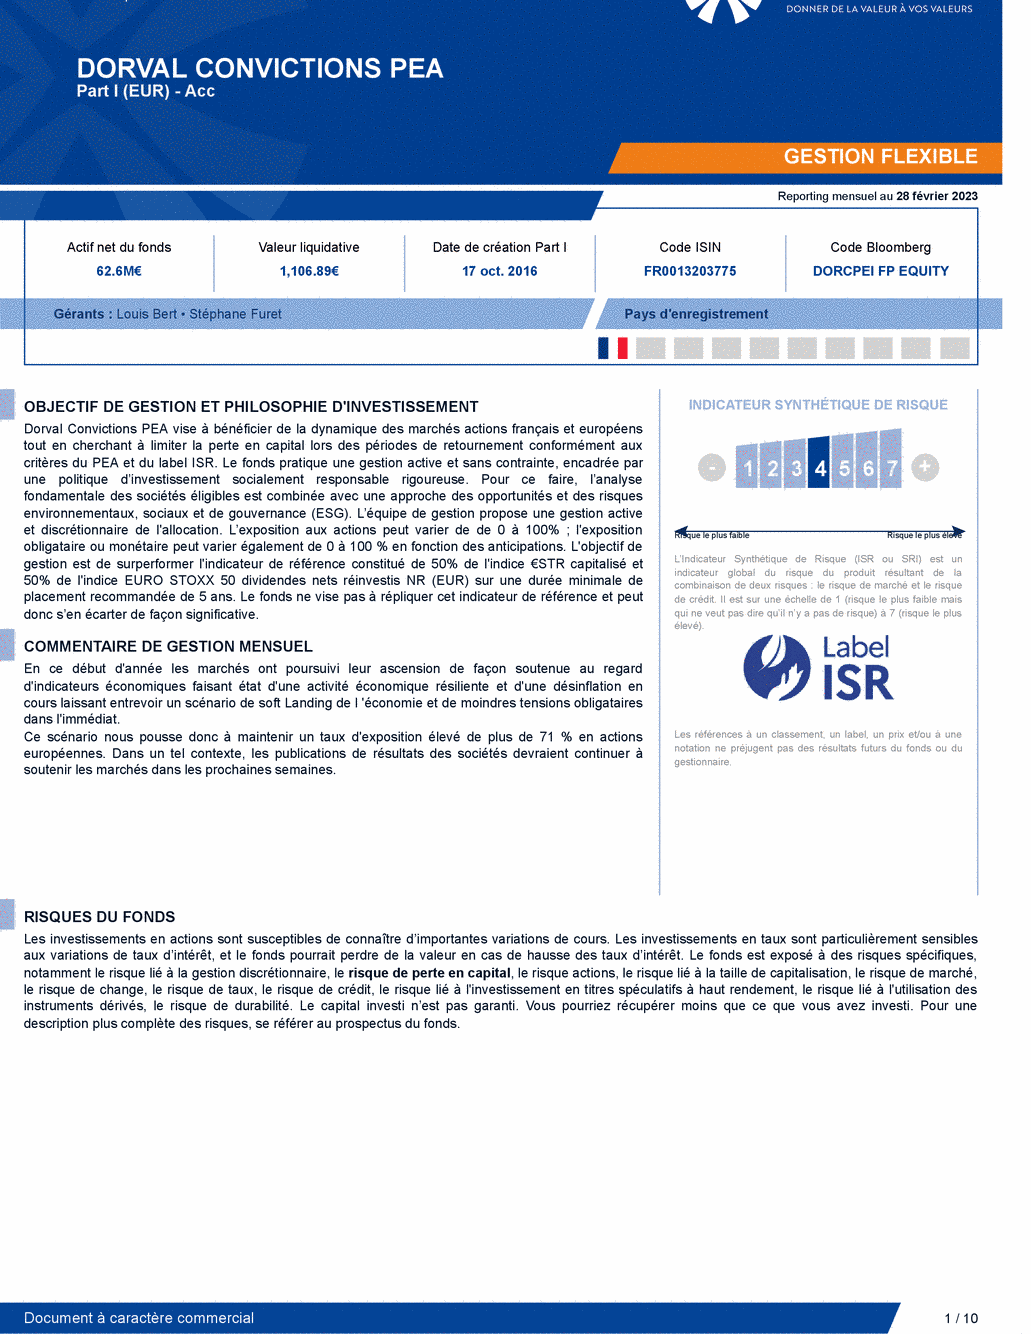 Reporting DORVAL CONVICTIONS PEA Part I - 28/02/2023 - Français